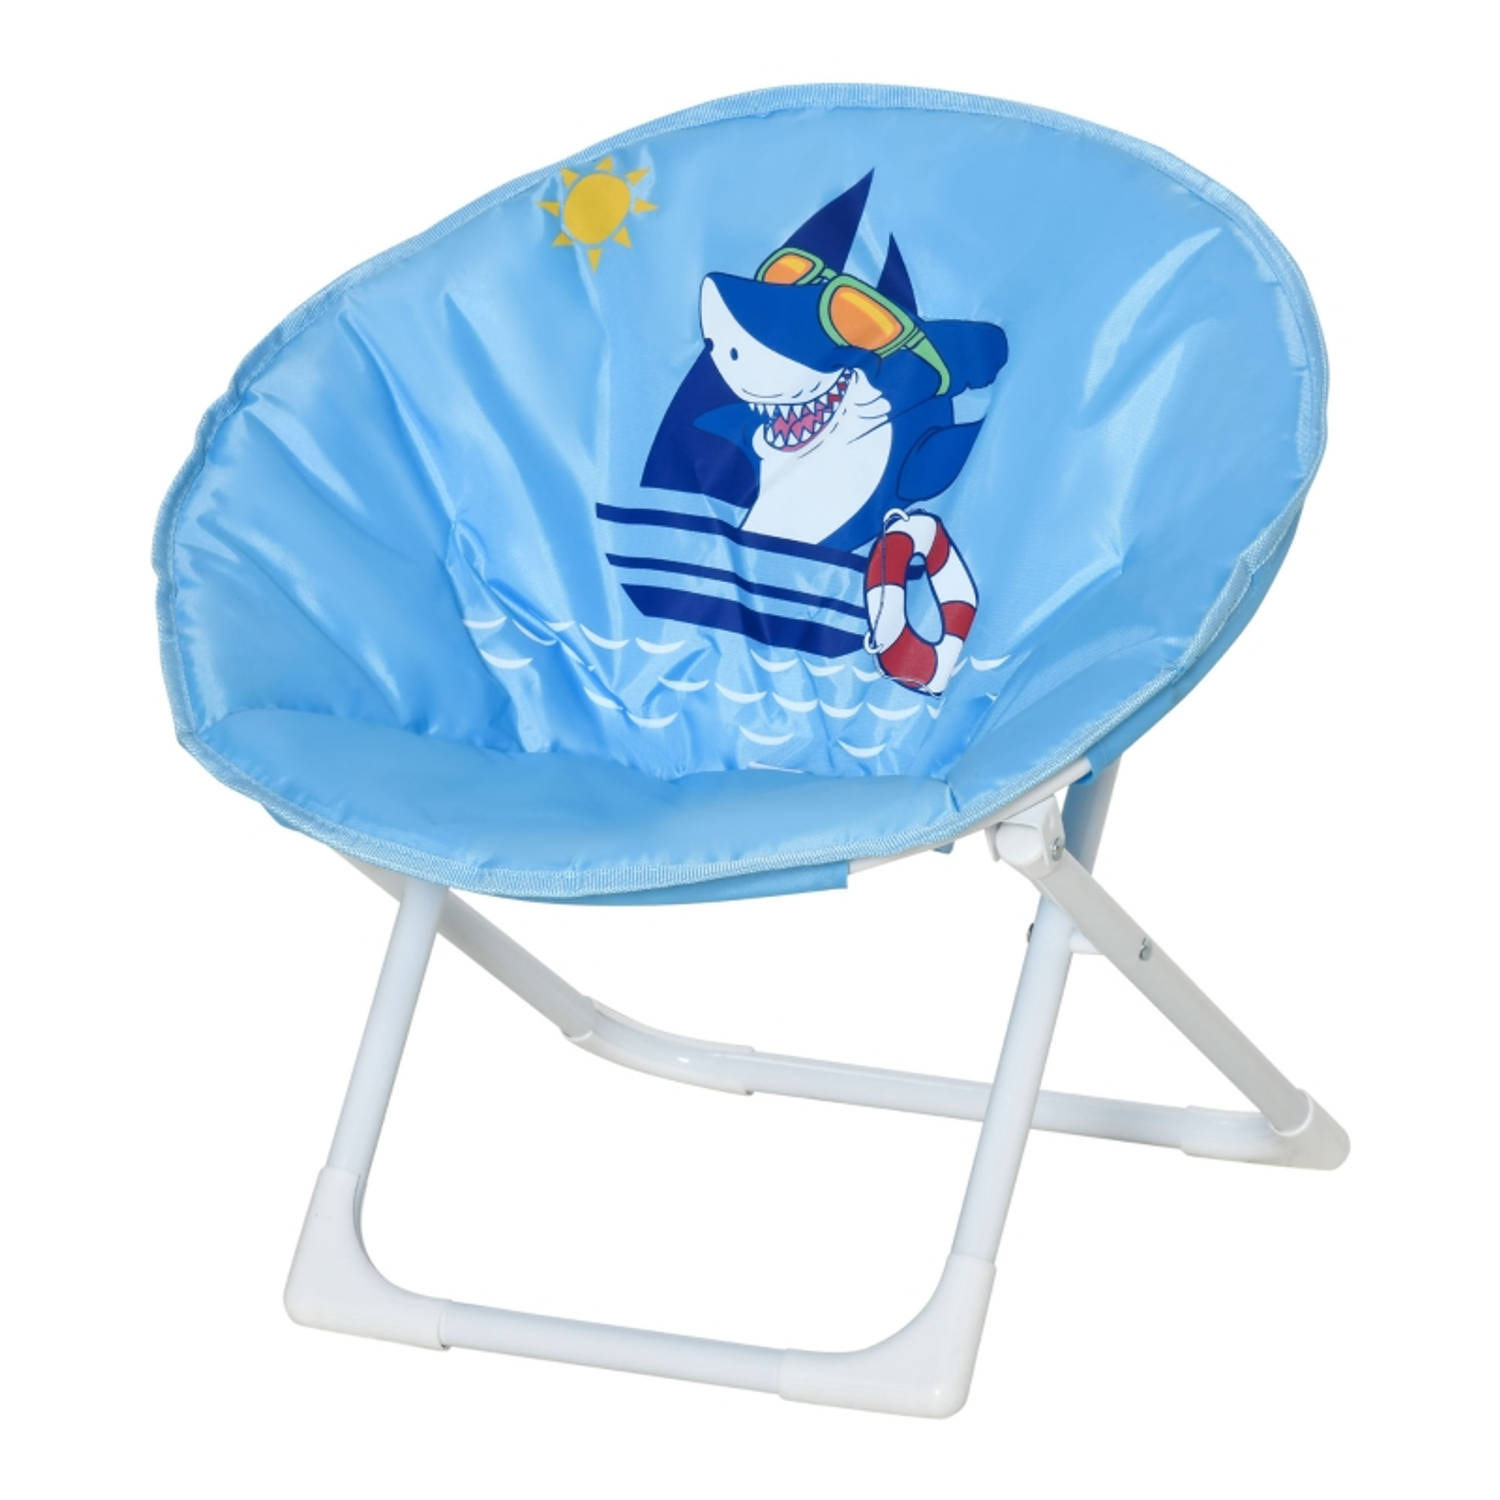 Vouwstoel kind - Campingstoel - Kinderstoel - Blauw - Ø50 x 49H cm